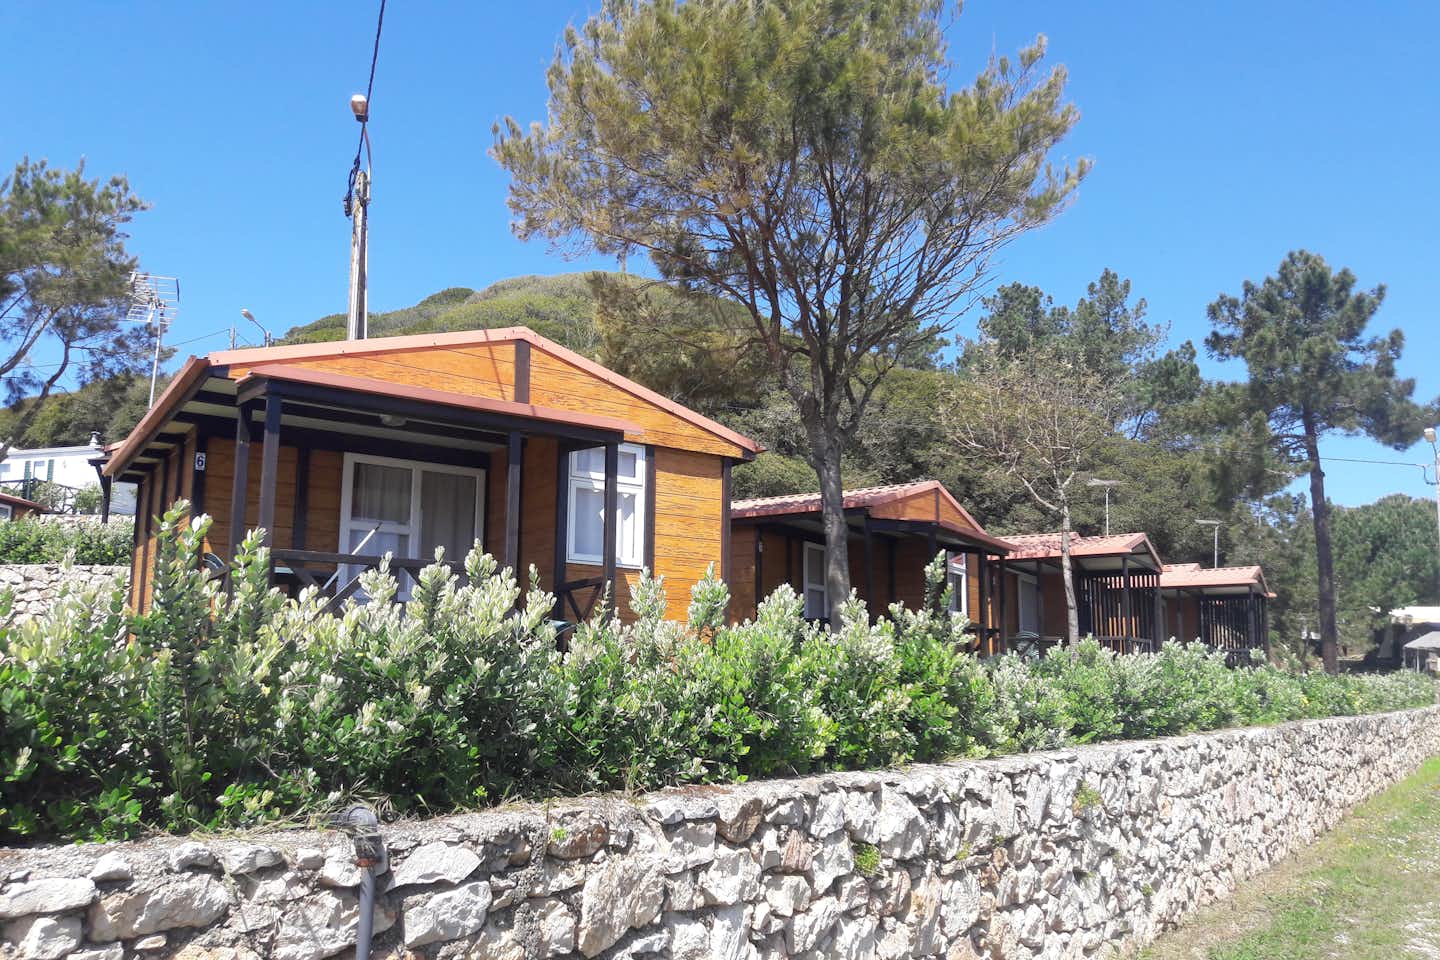 Camping Colina do Sol - Holzbungalows mit Veranda auf dem Campingplatz